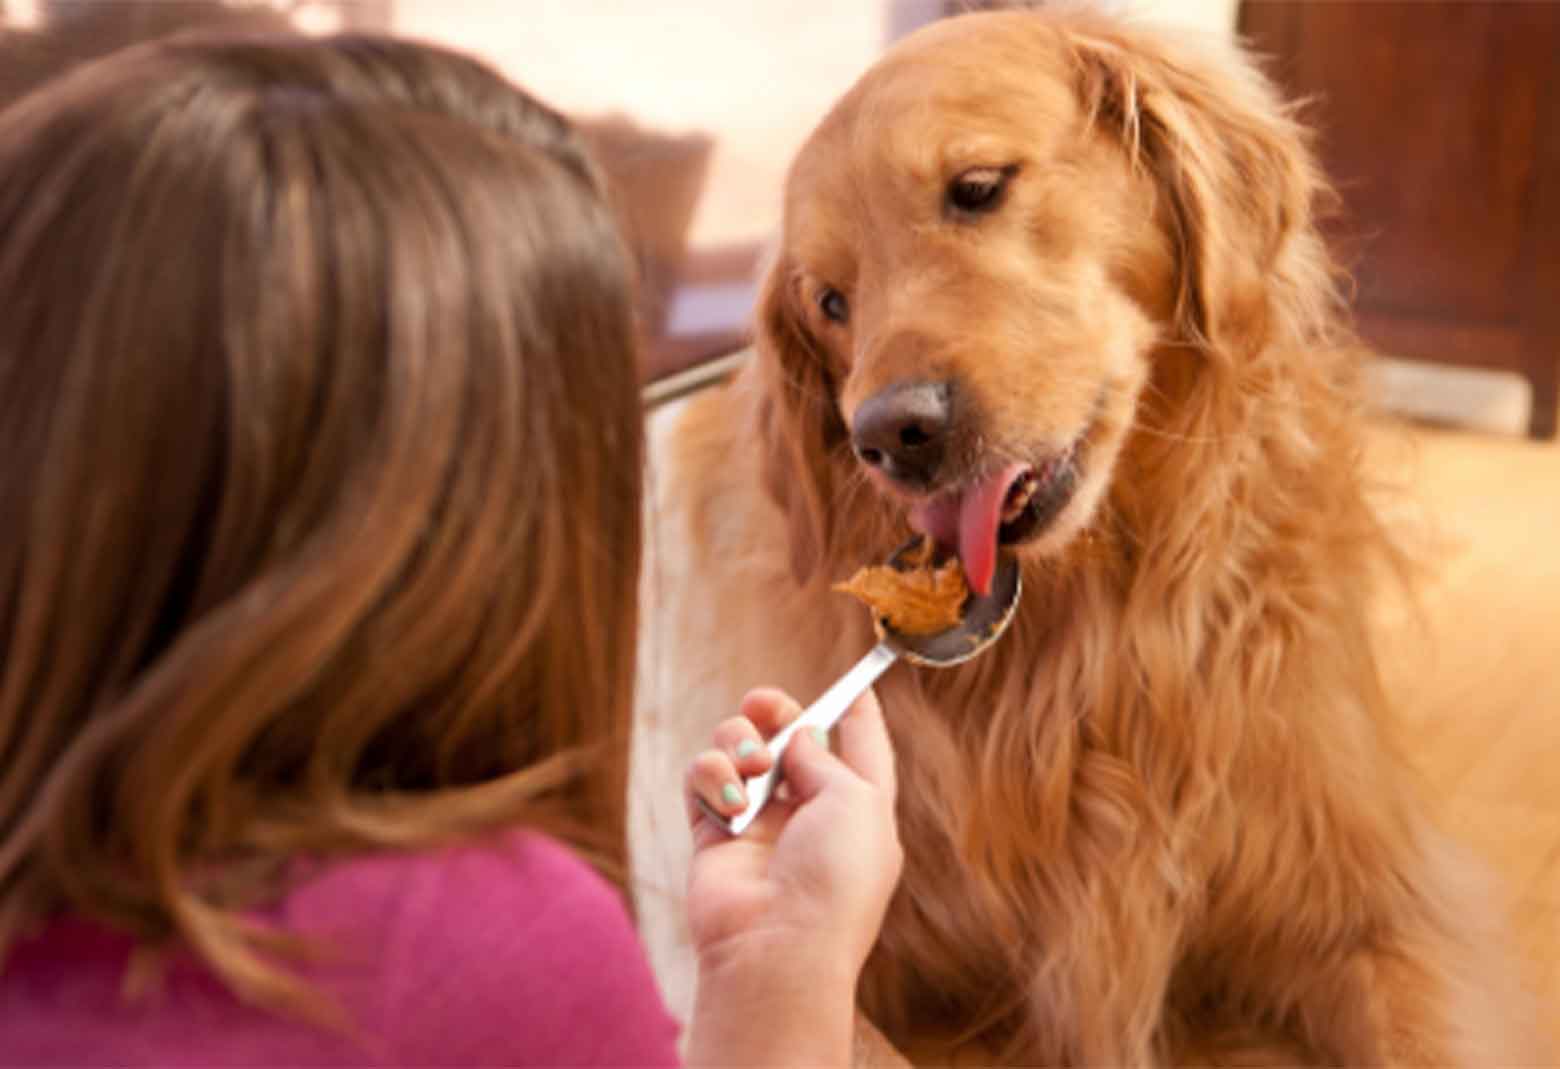 Woman Feeding Dog Peanut Butter From Spoon